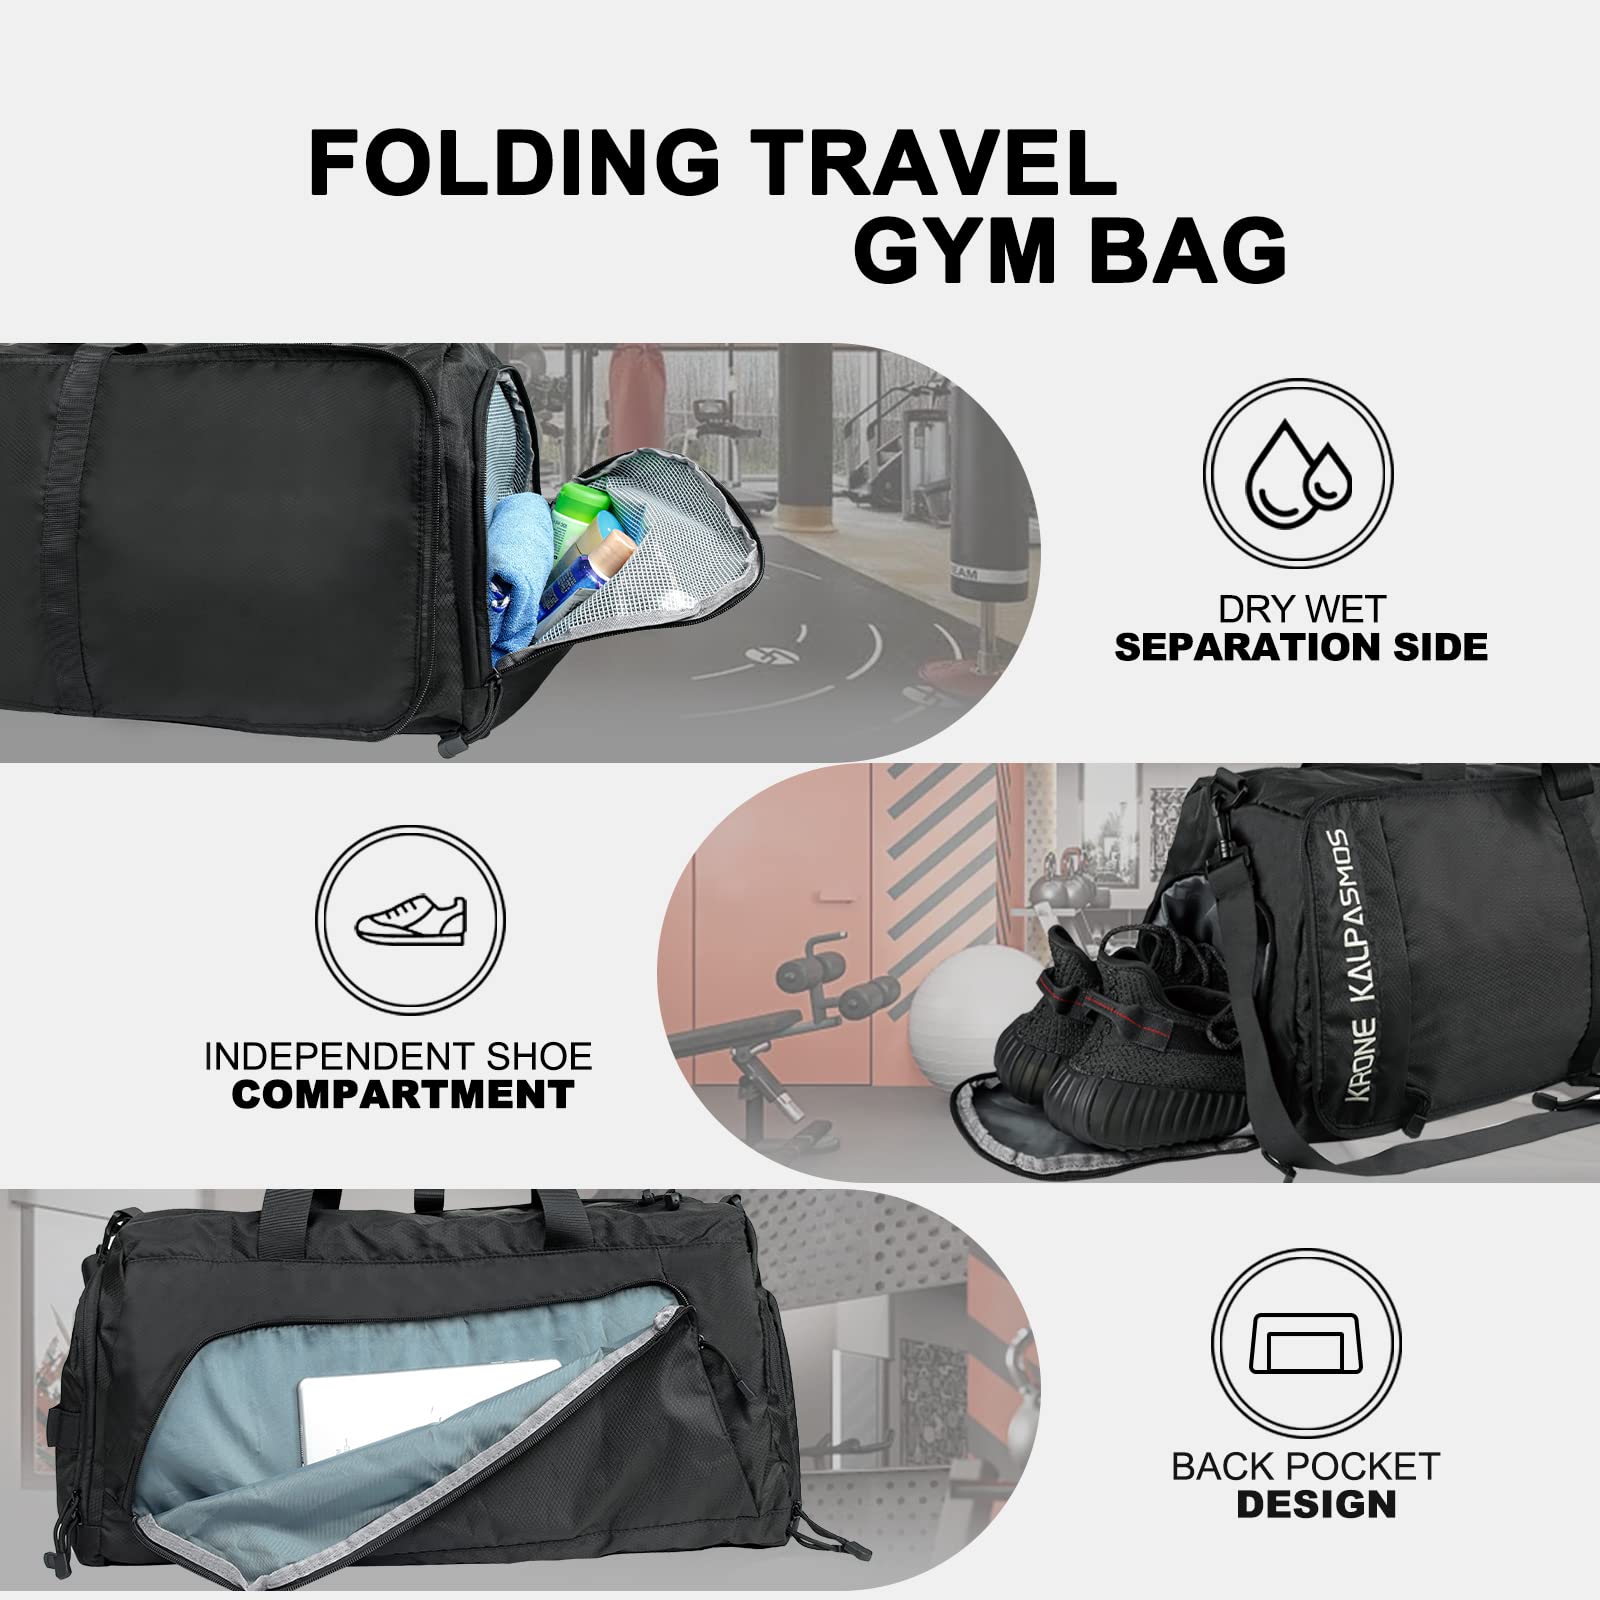 Gym Bag/Foldable Sports Duffle Bag for Men/Women